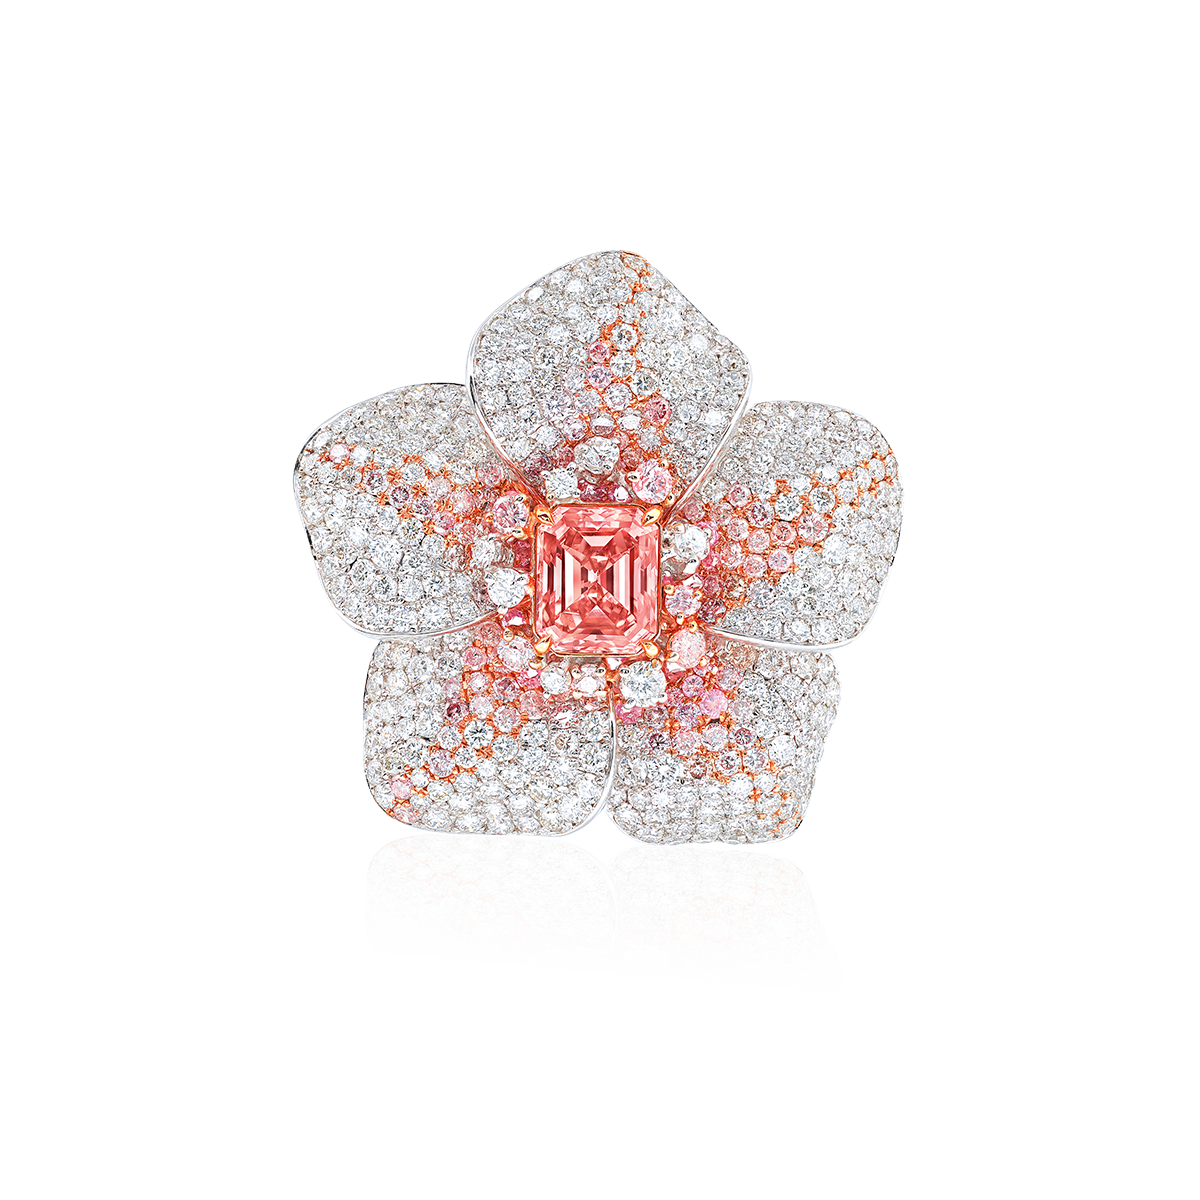 阿蓋爾粉鑽戒 1.07克拉
Pink Diamond from Argyle Mine 
and Diamond Ring
